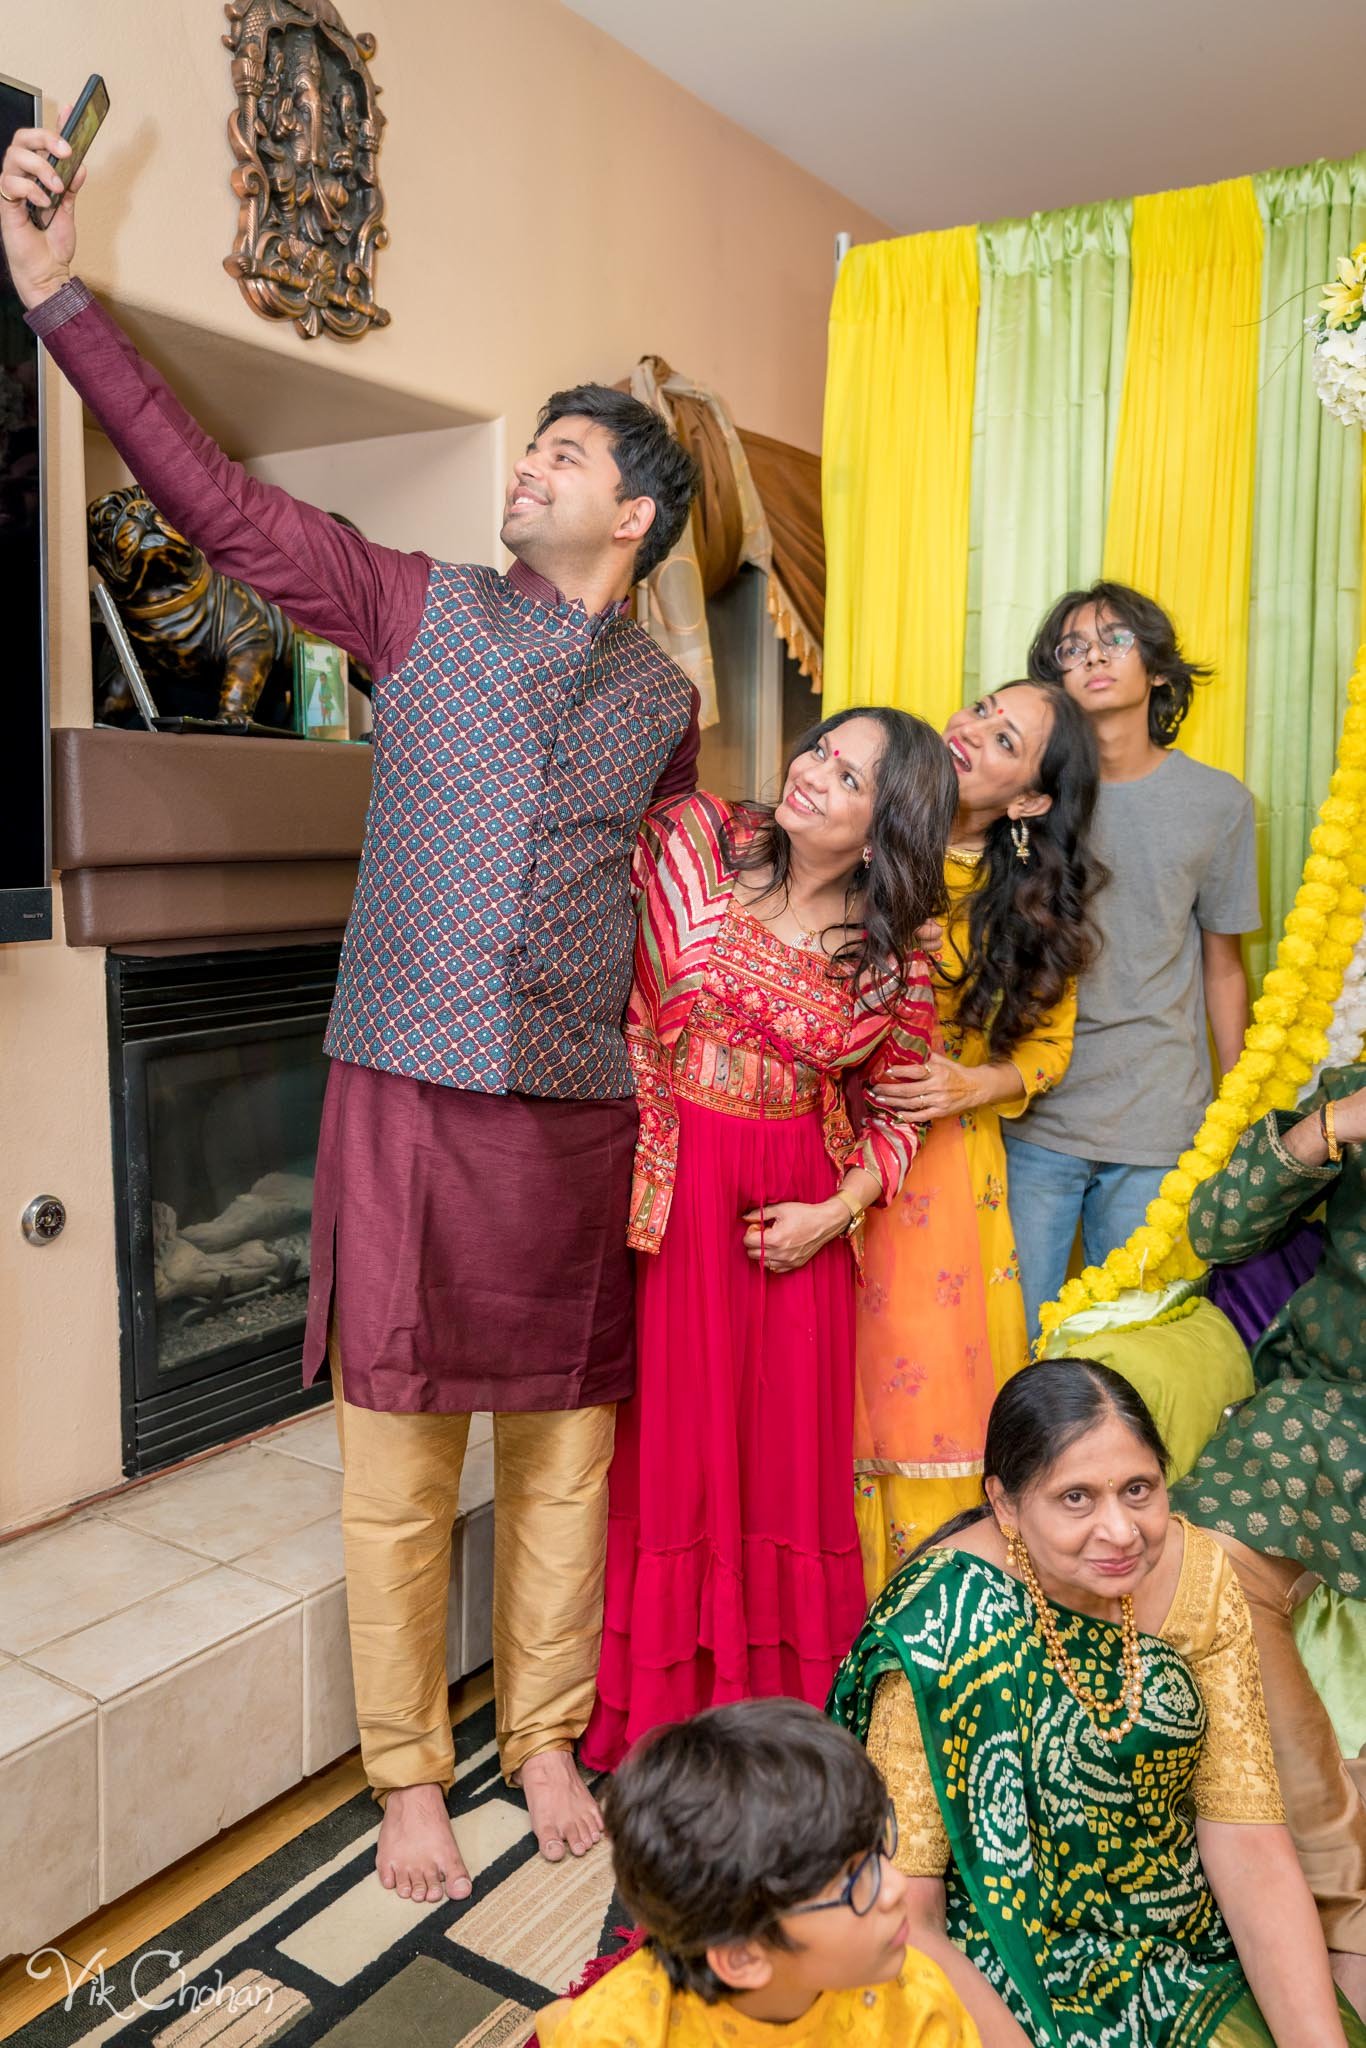 2022-02-03-Hely-&-Parth-Mendi-Indian-Wedding-Vik-Chohan-Photography-Photo-Booth-Social-Media-VCP-166.jpg